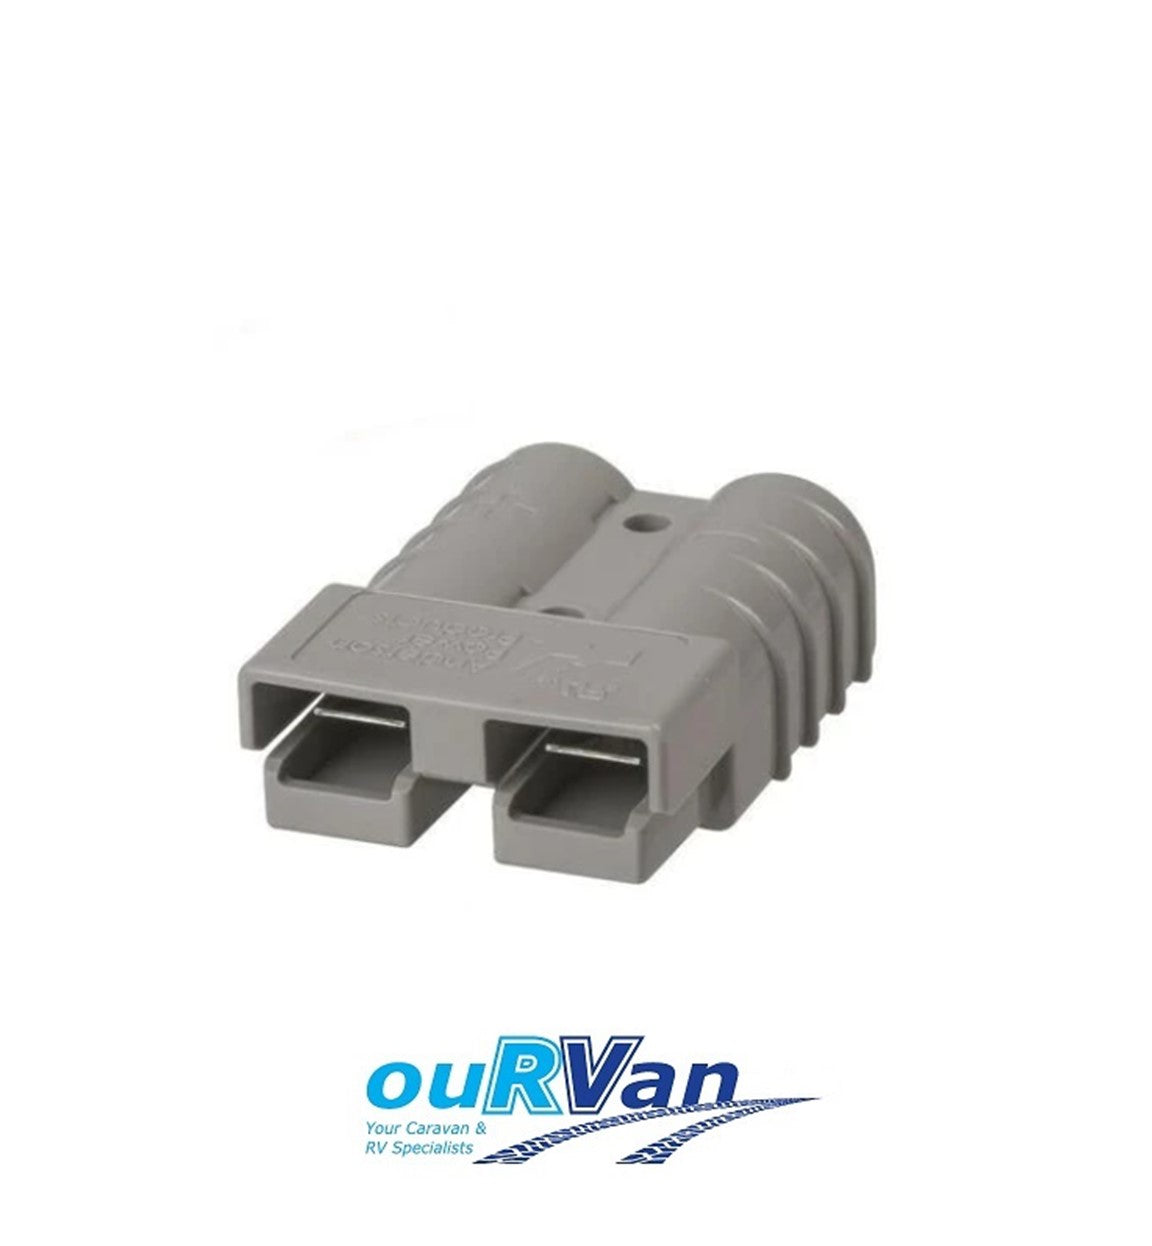 Genuine Anderson Plug 50a Power Connector 6 Gauge Contacts